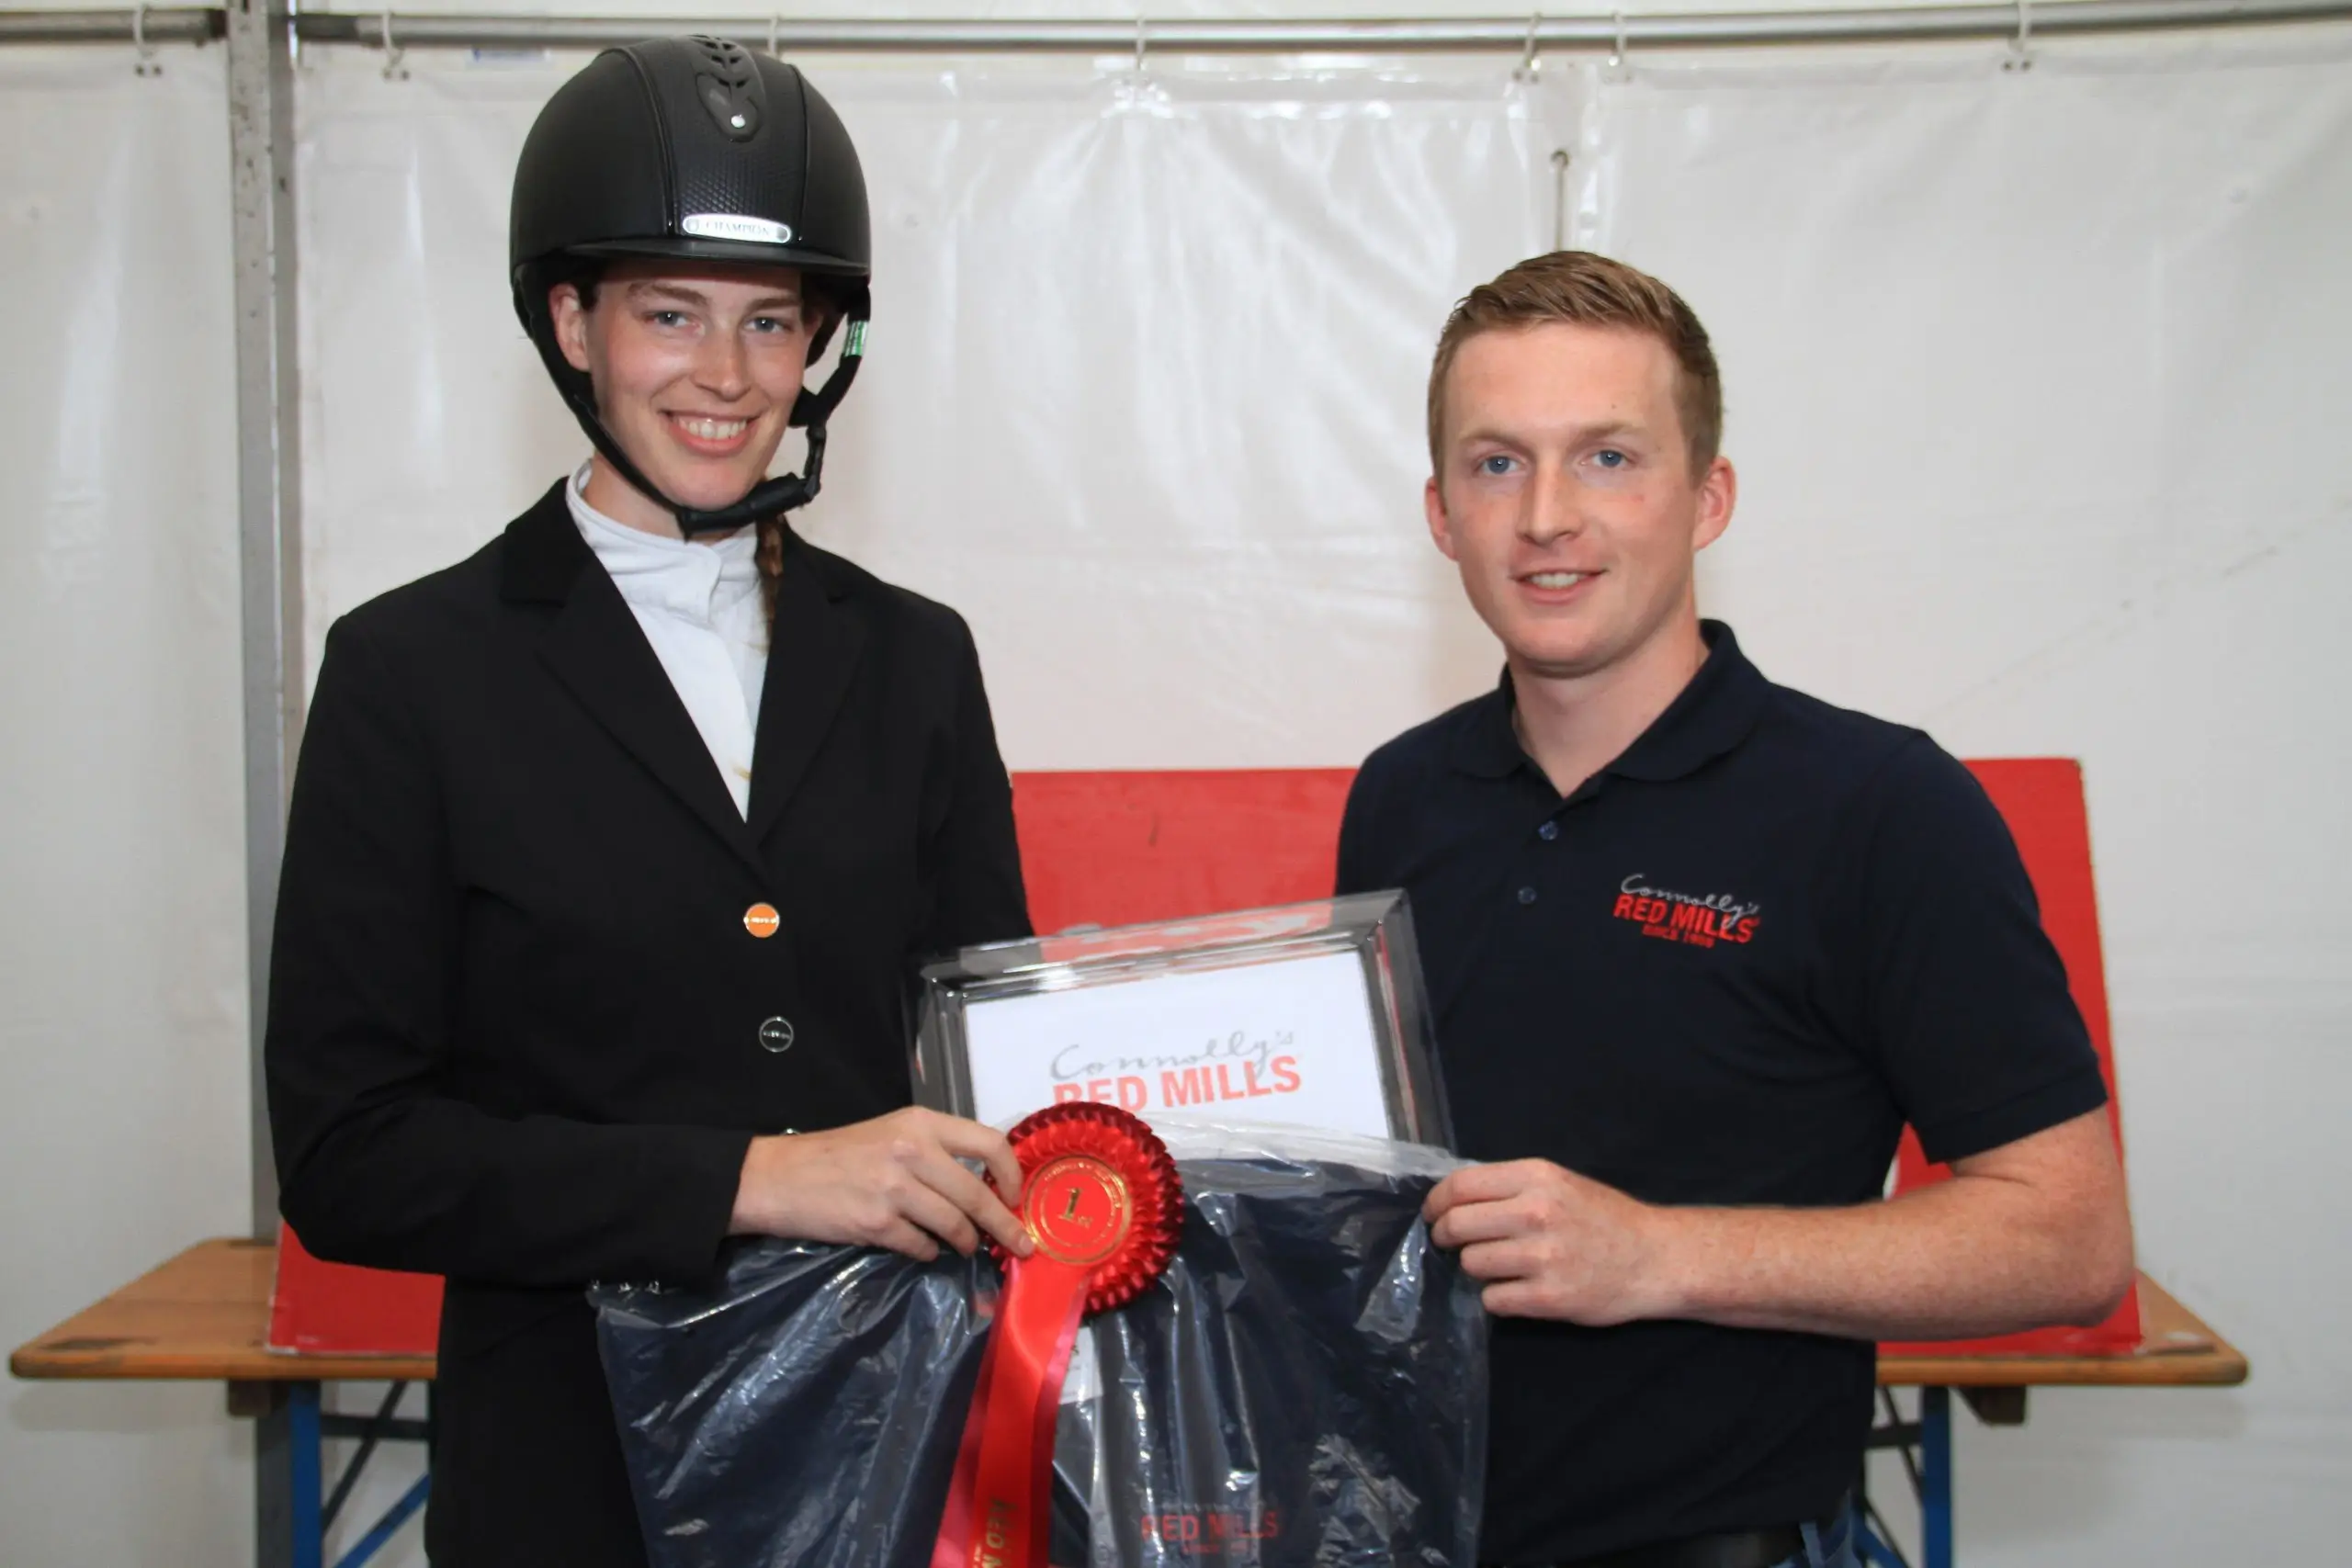 Cork rider impresses to win Connolly’s RED MILLS Intermediate Dressage title